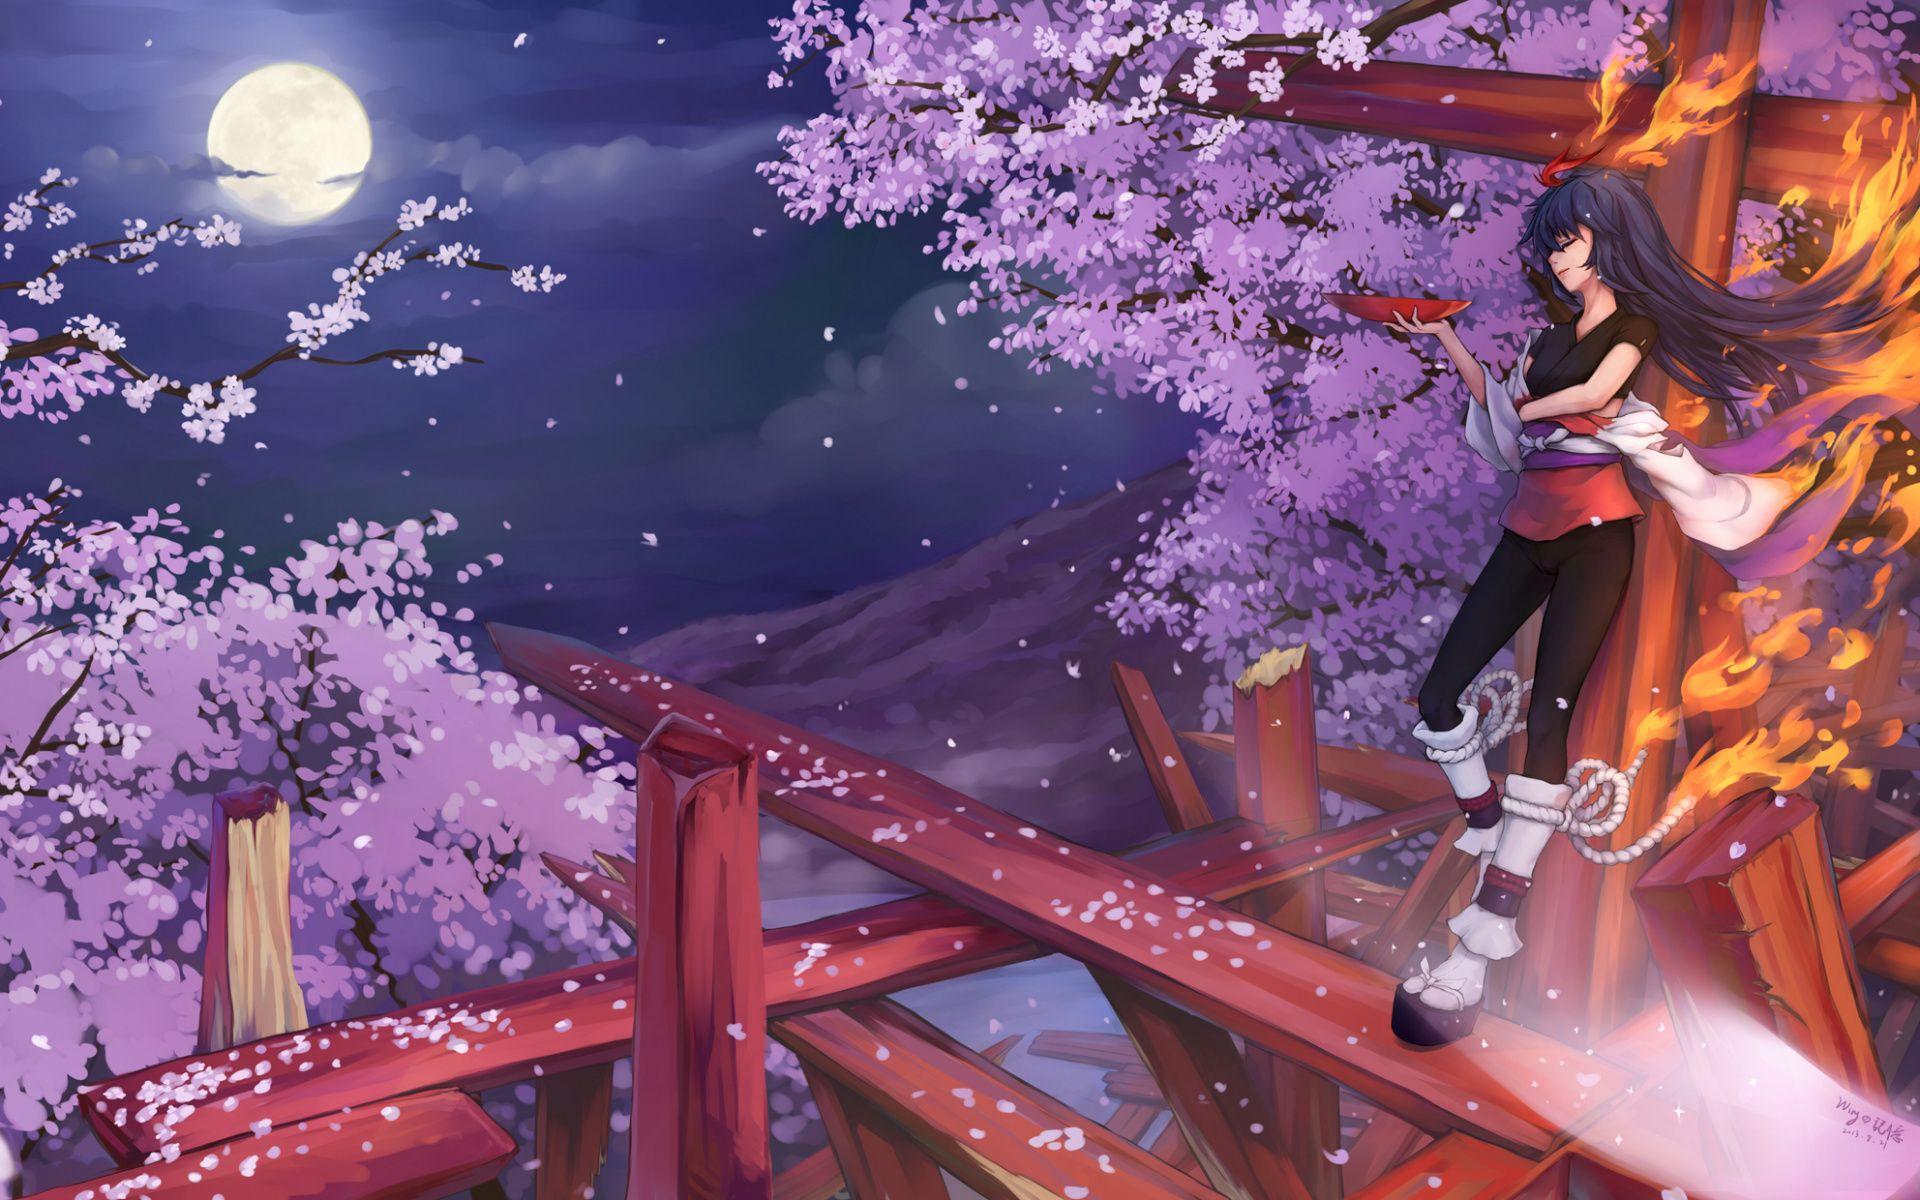  Anime  Sakura  Wallpapers Top Free Anime  Sakura  